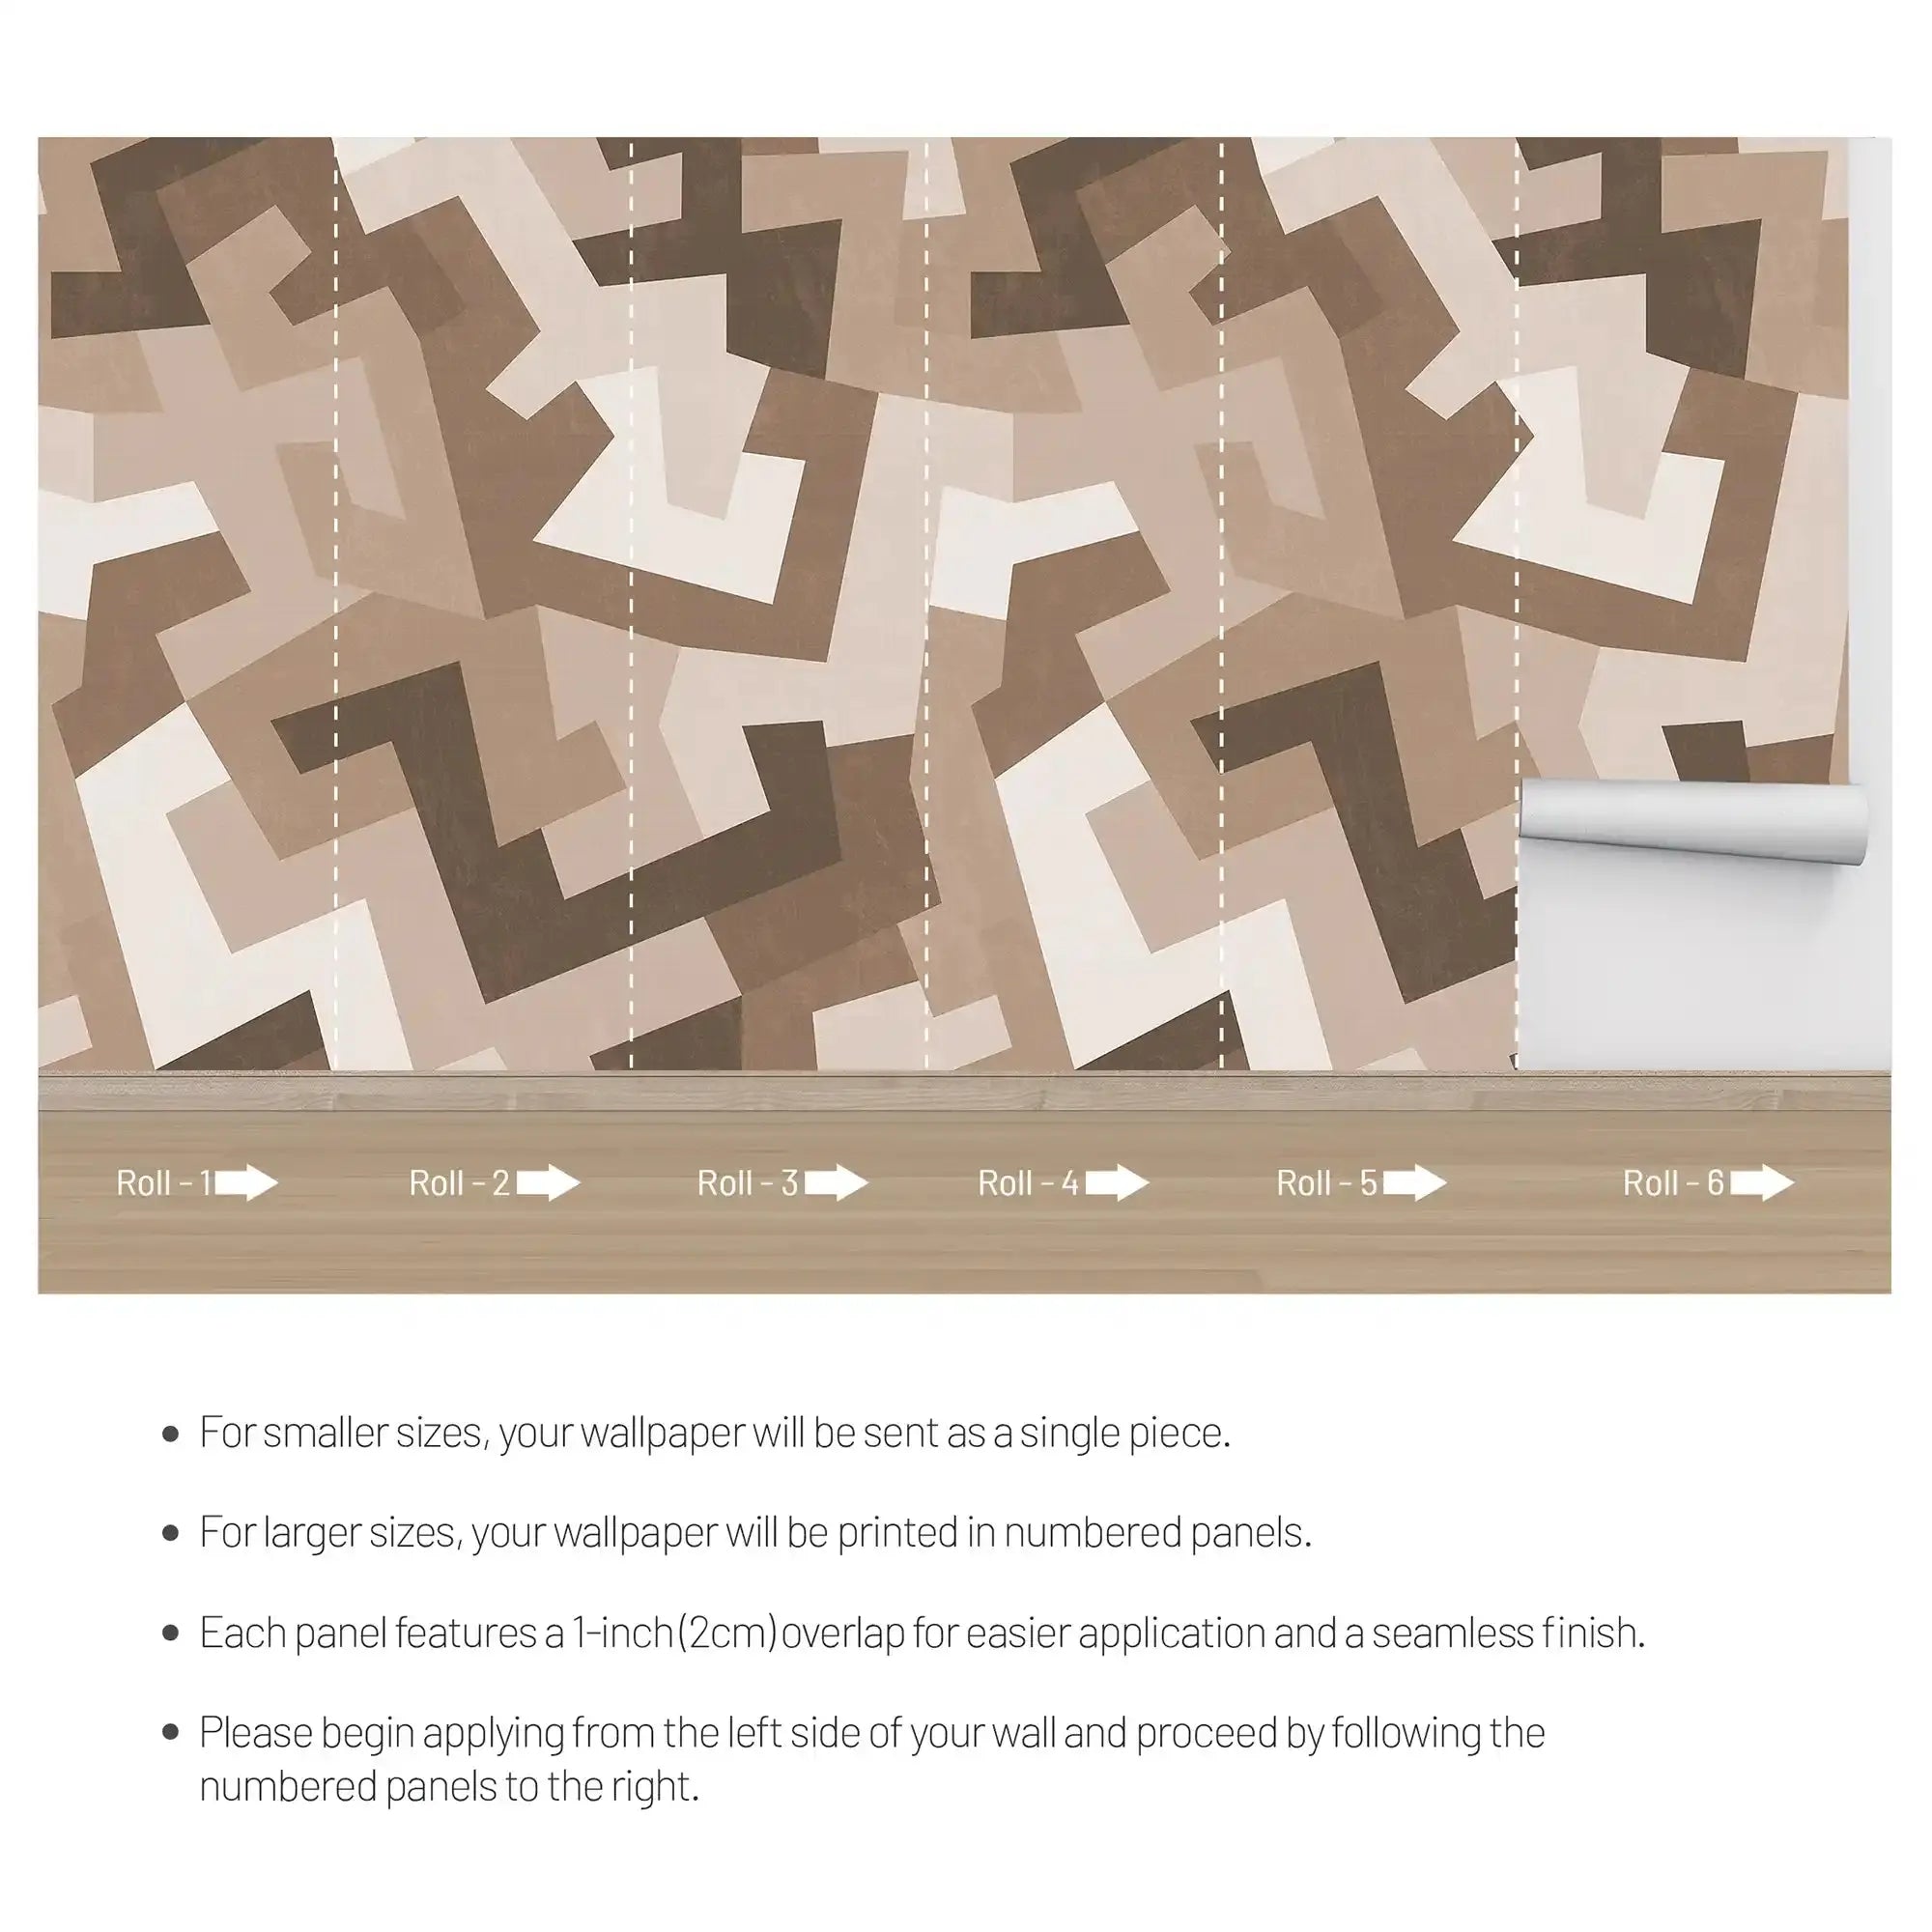 3091-E / Peel and Stick Geometric Wallpaper - Versatile Wall Mural for Bathroom, Bedroom, Kitchen, and Living Room - Artevella